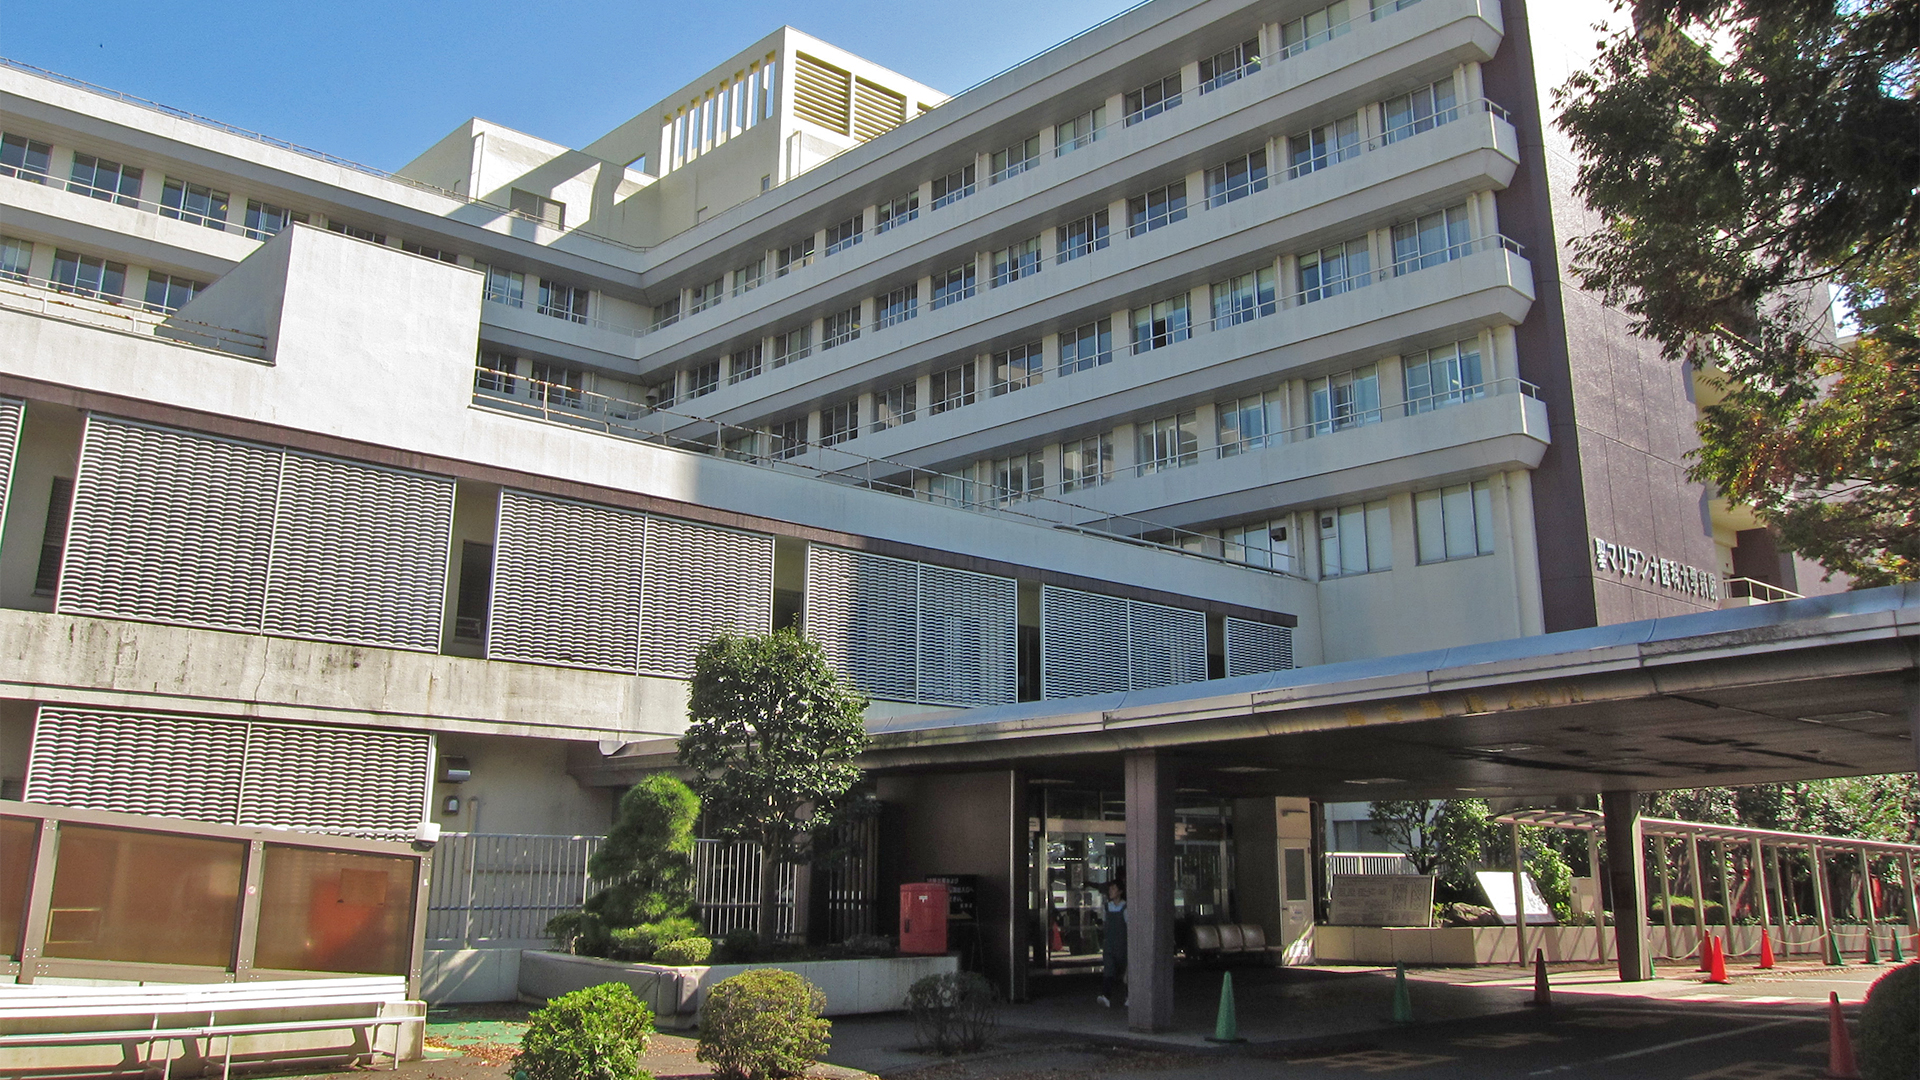 L'Hôpital catholique universitaire Sainte Marianne de Tokyo | Wikimedia Common / Waka77 / DDP